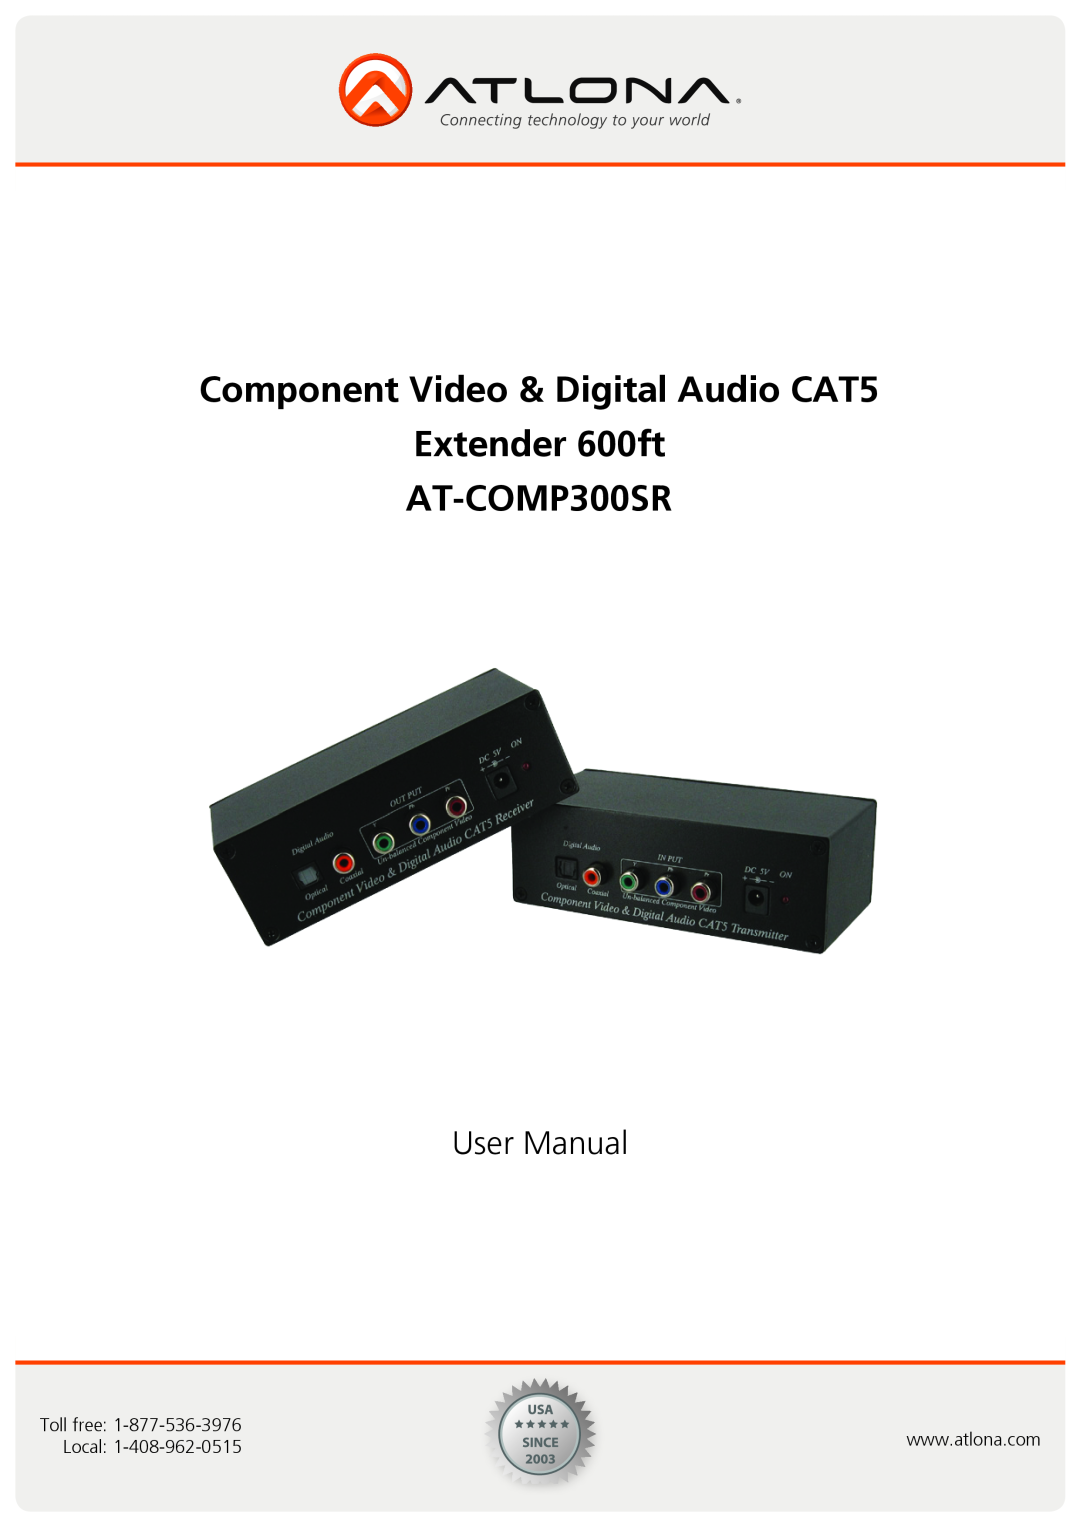 Atlona user manual Component Video & Digital Audio CAT5 Extender 600ft AT-COMP300SR, User Manual, Toll free, Local 